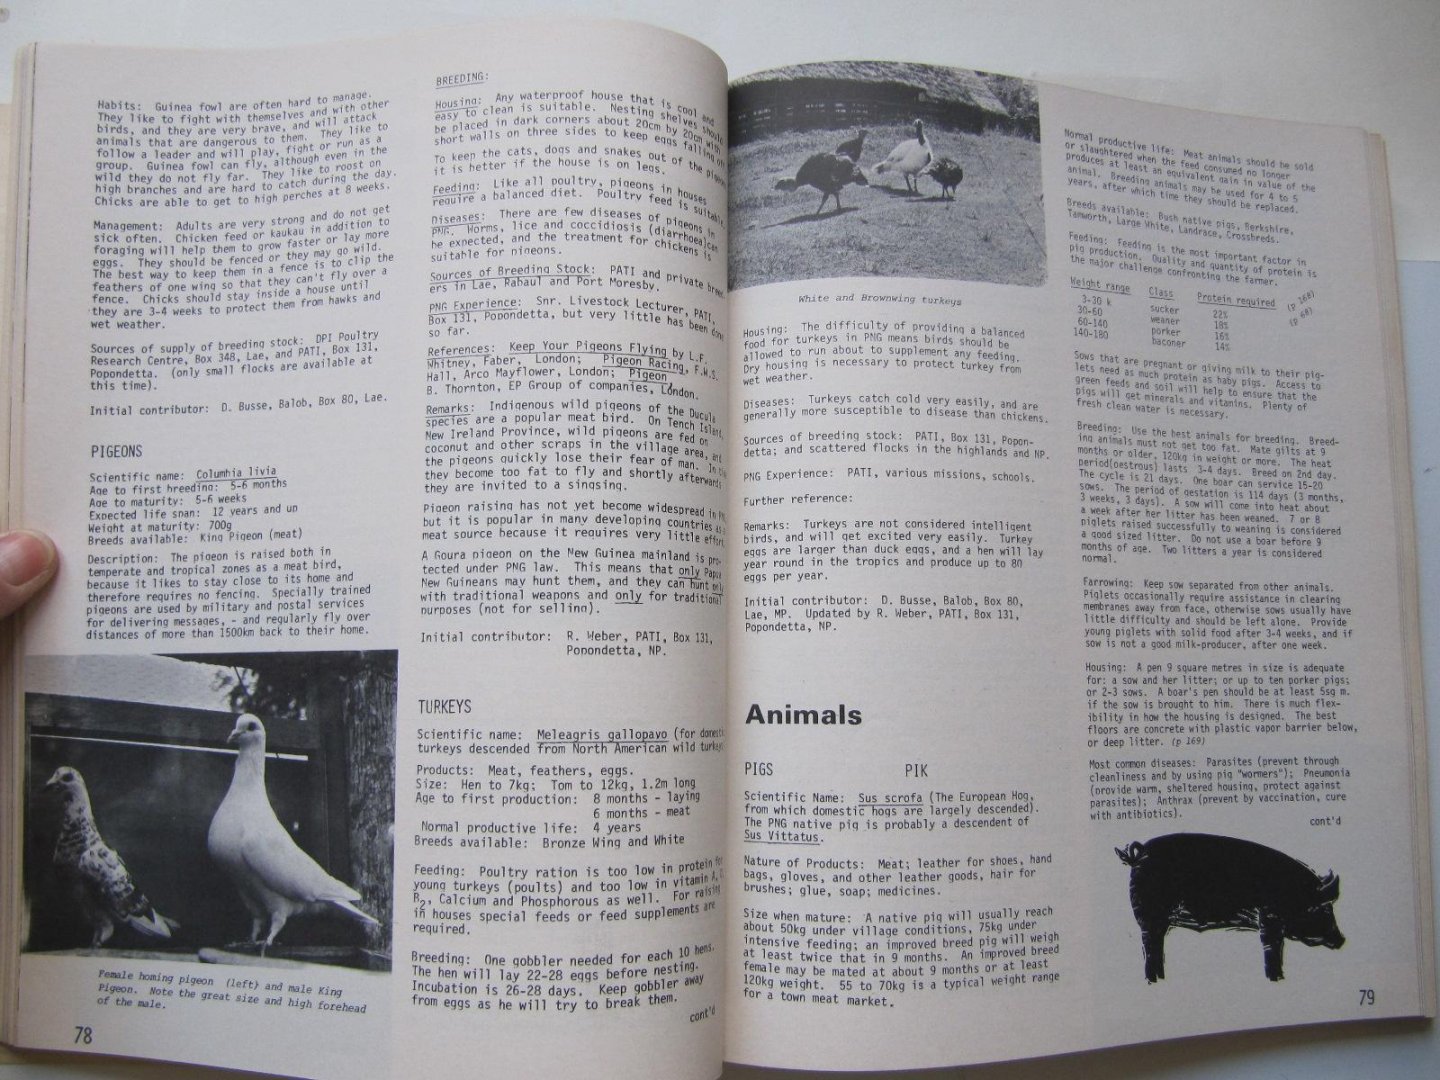 P.R. Hale and B.D. Williams - Liklik Buk, A rural Development Handbook Catalogue for Papua New Guinea